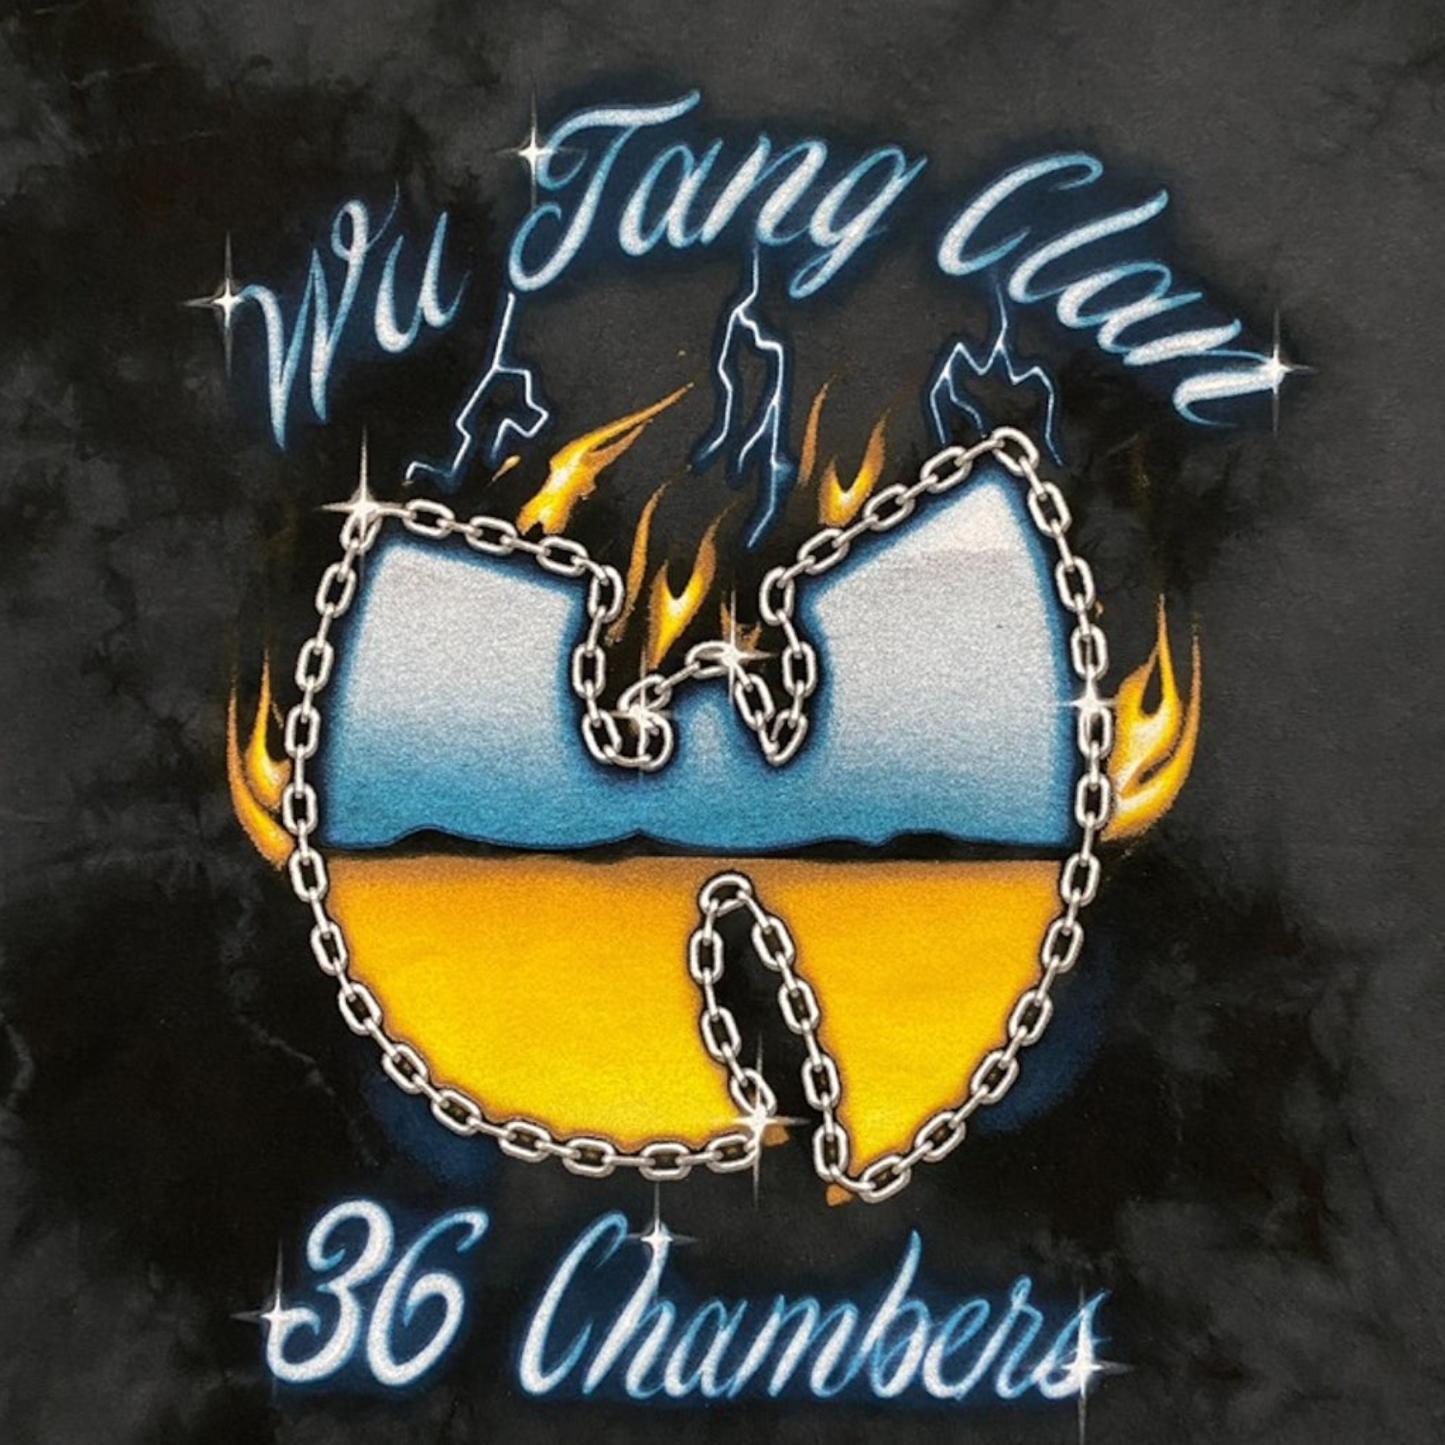 Wu-Tang Clan Black Tie-Dye 36 Chambers Music T-Shirt - Mens/Unisex